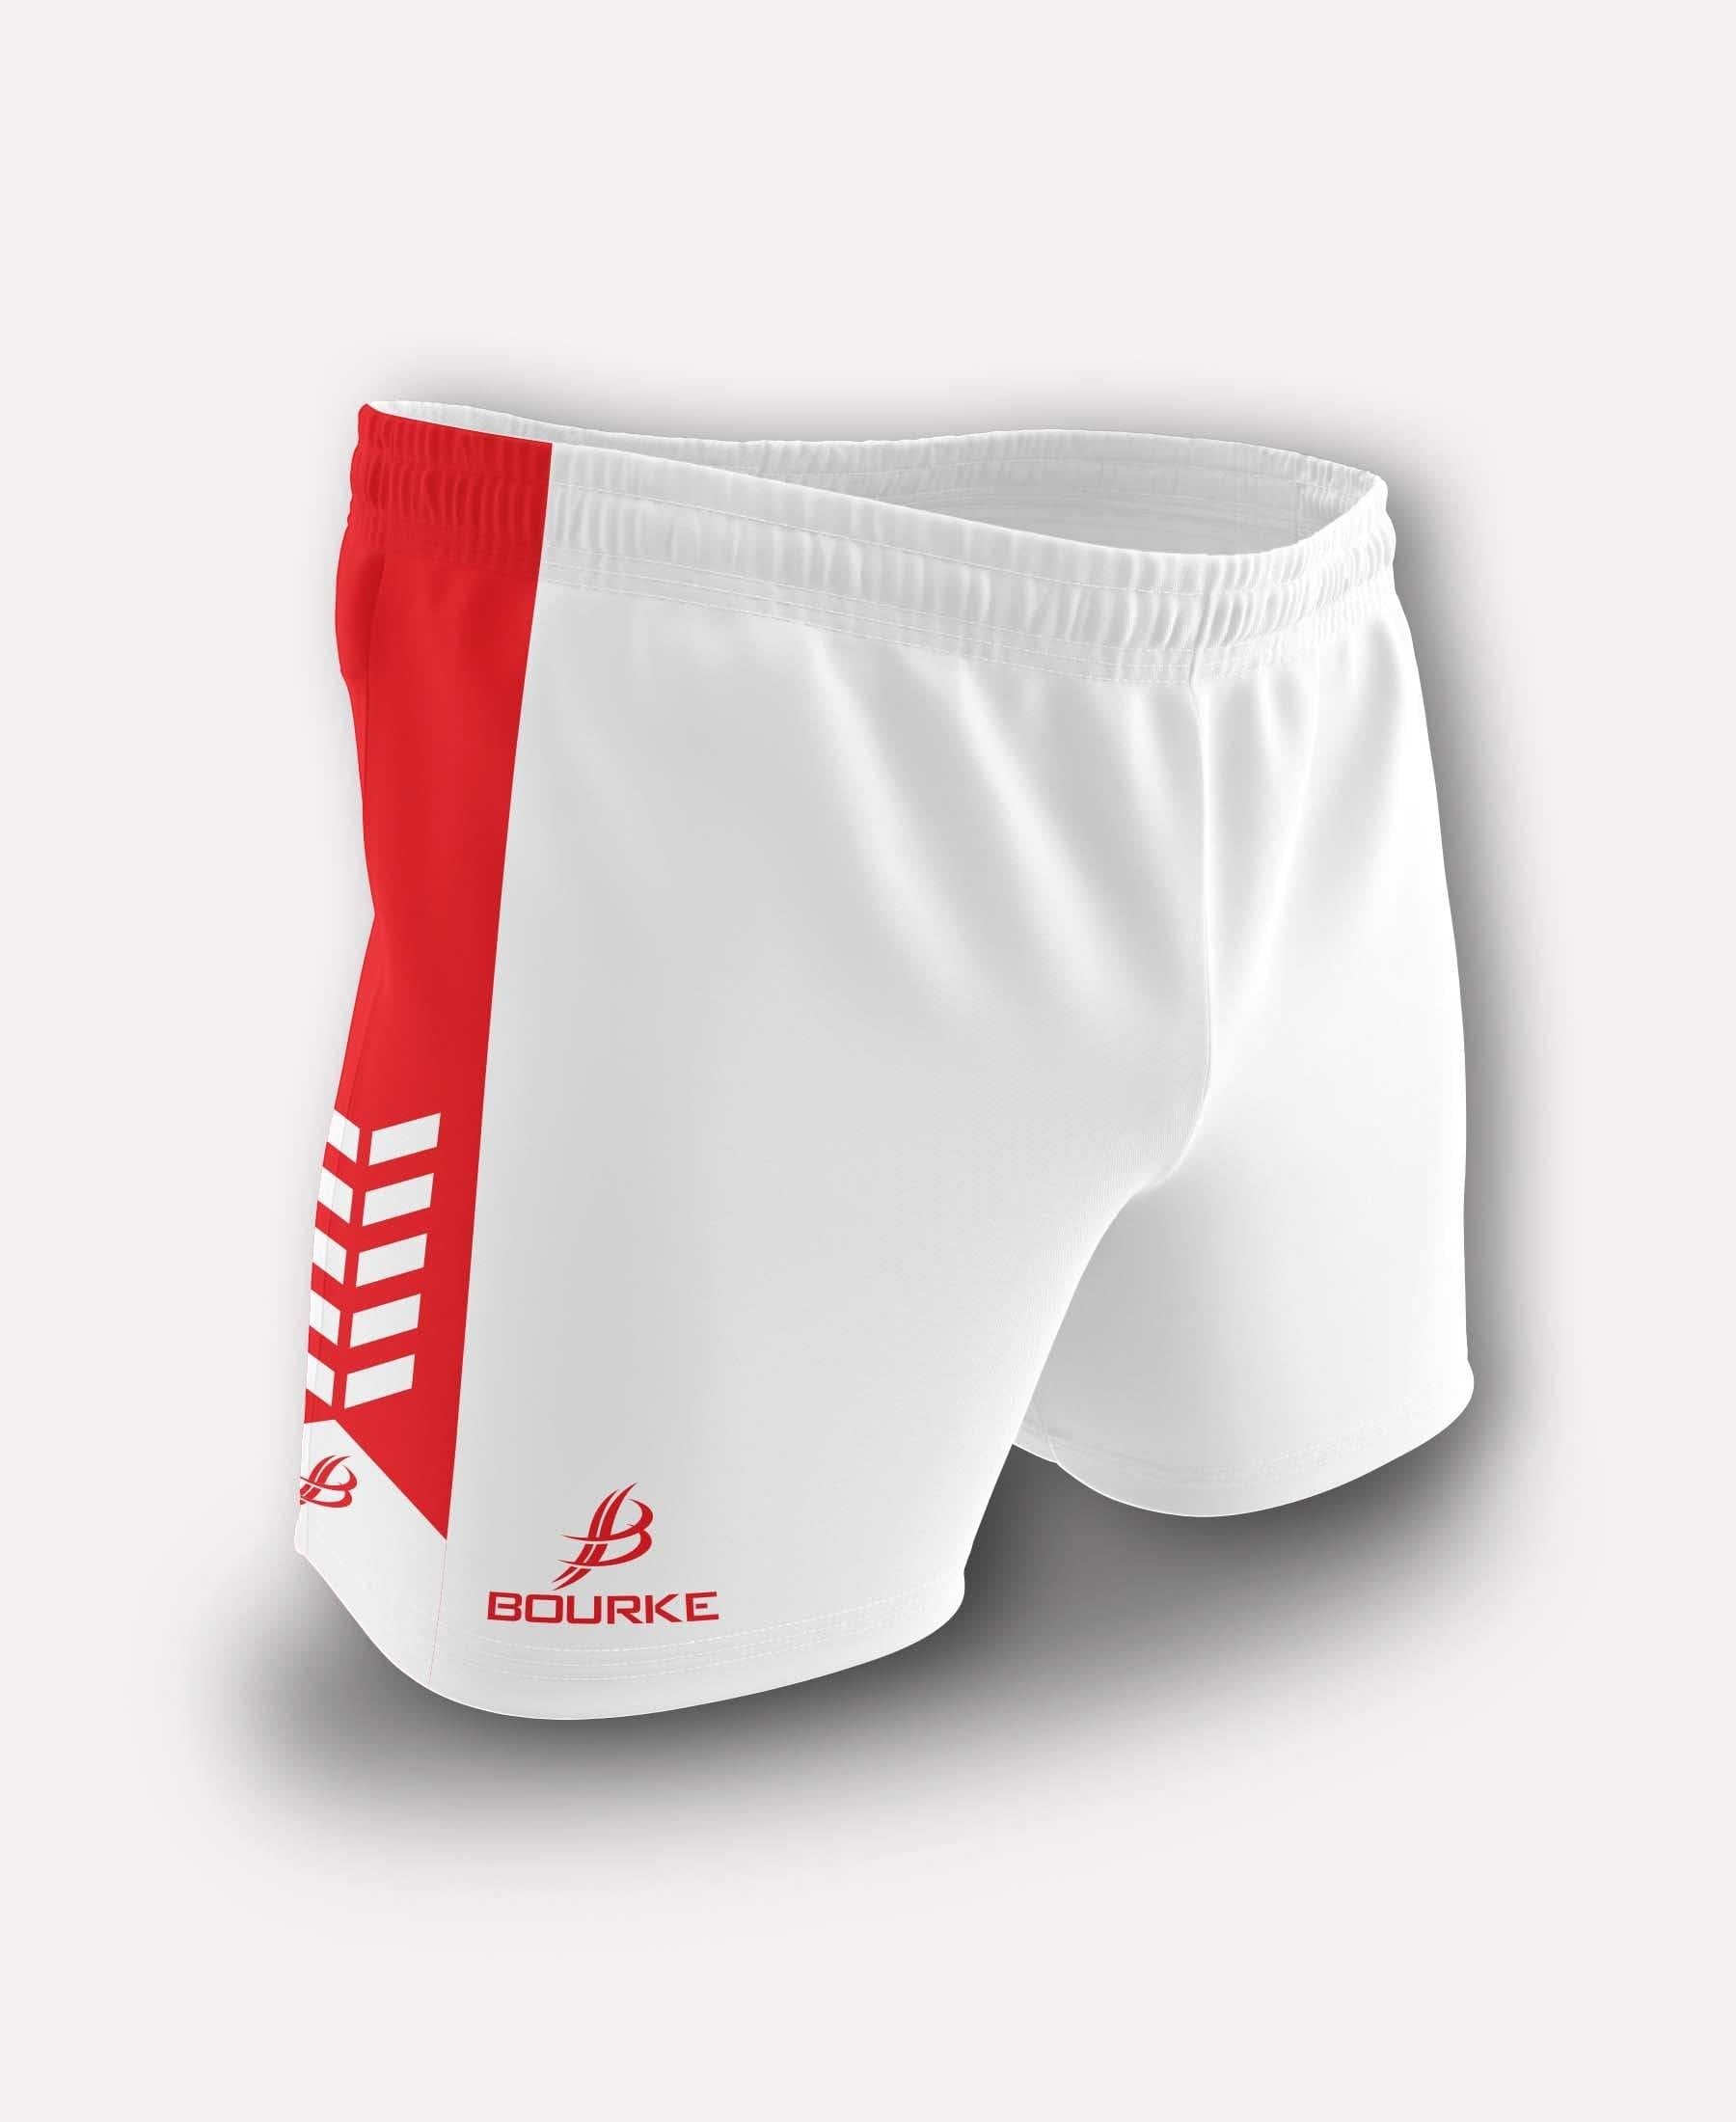 Chevron Kids Shorts (White/Red) - Bourke Sports Limited